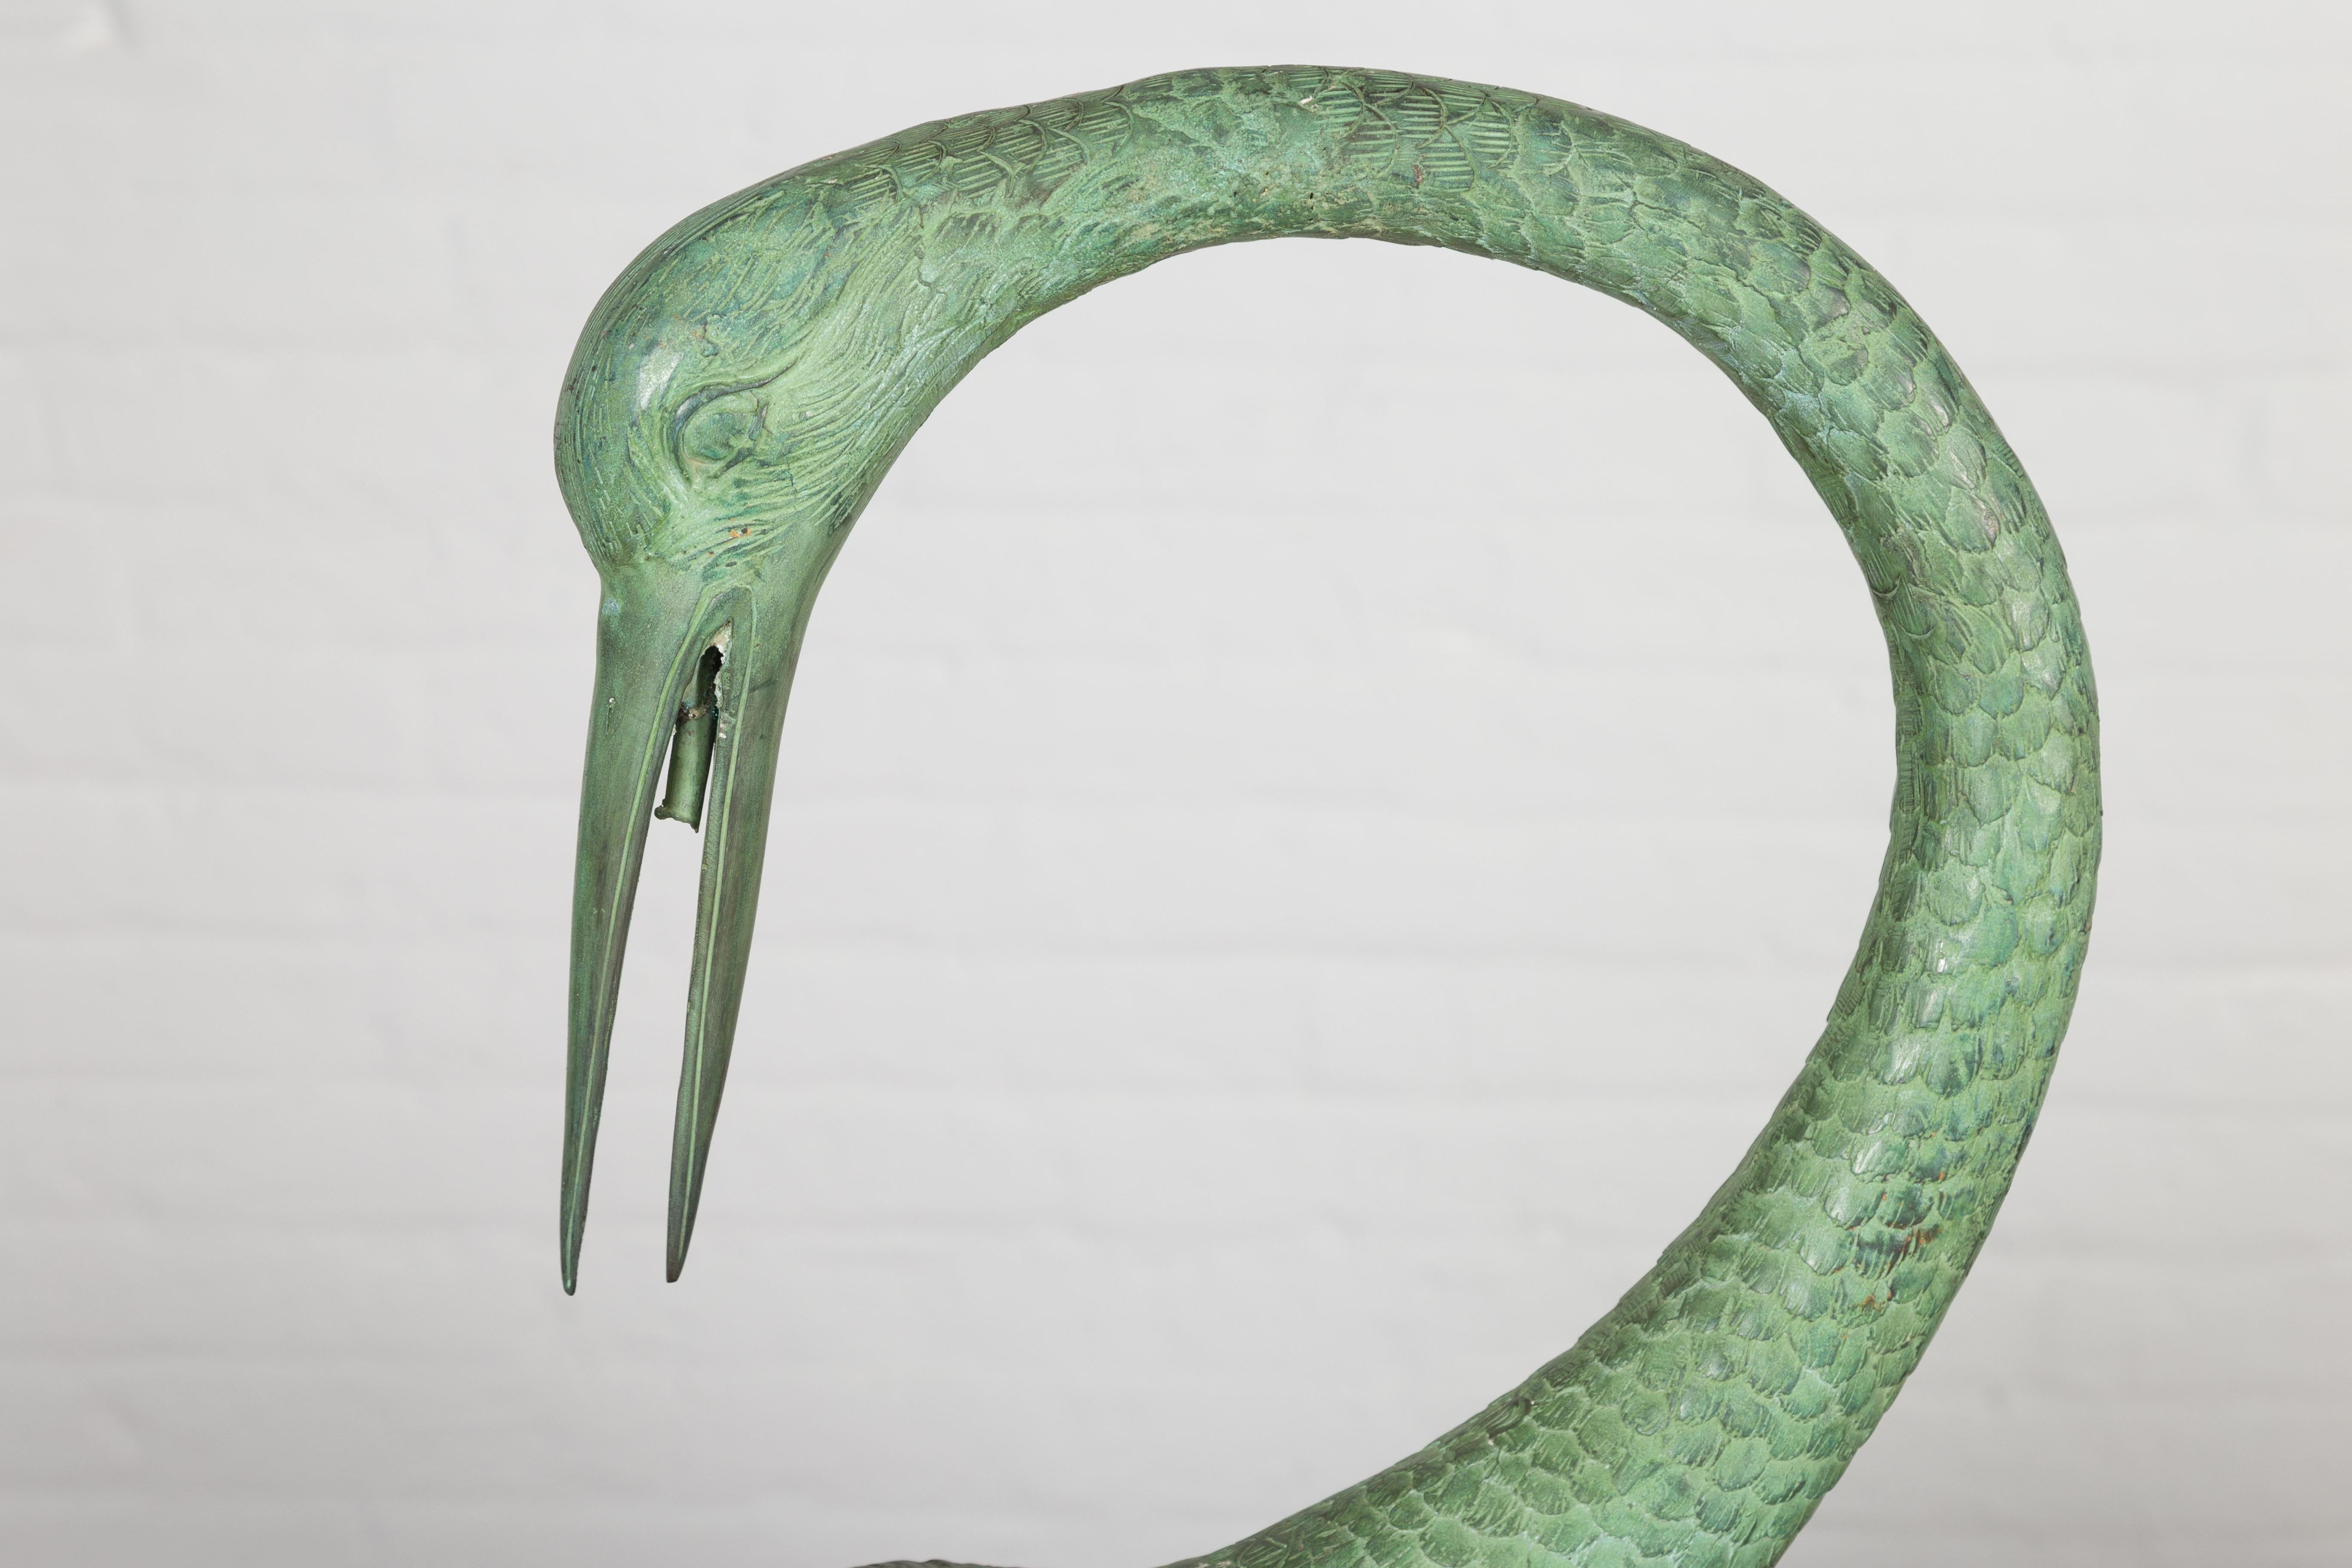 Pair of Lifesize Lost Wax Cast Bronze Crane Sculptures with Verdigris Patina For Sale 7